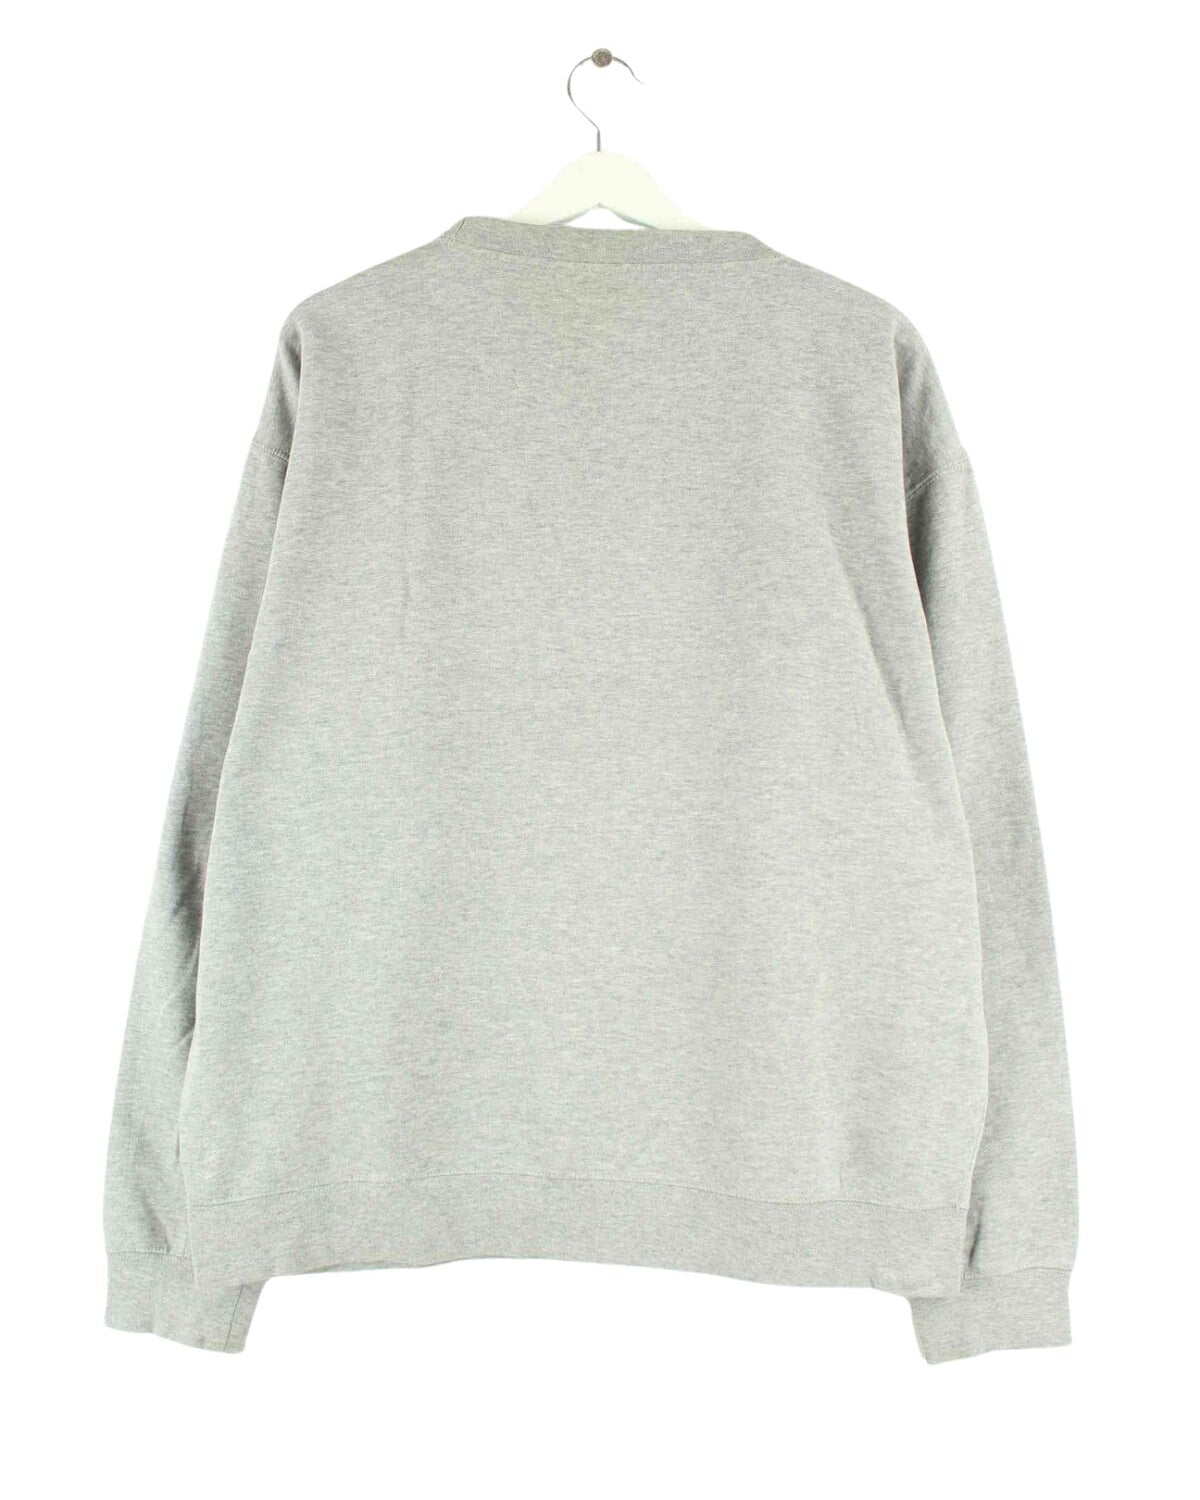 Fila Embroidered Sweater Grau XL (back image)